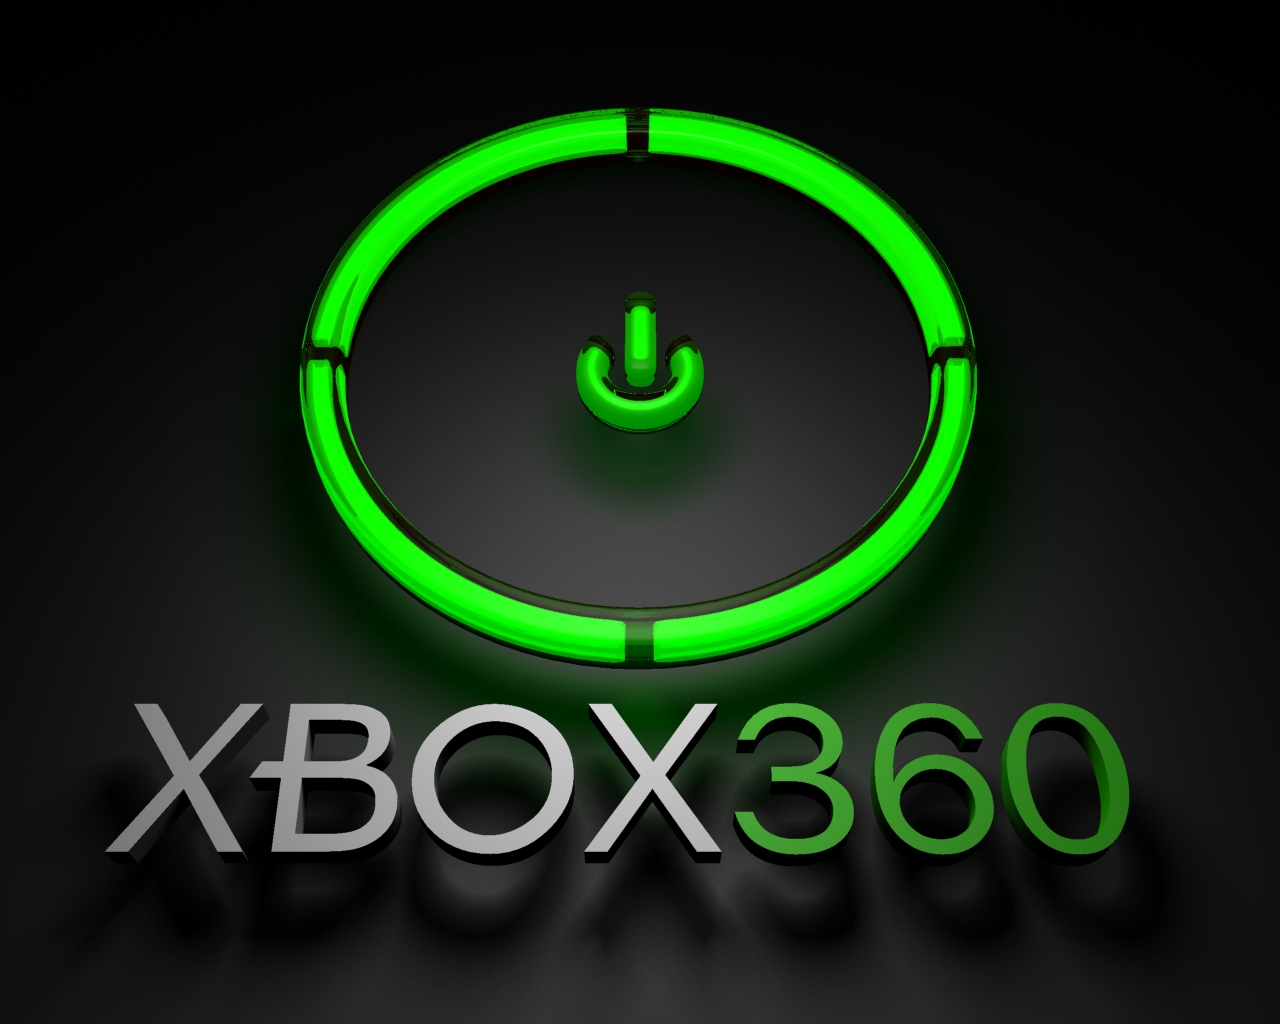 xbox 360 green ring power title wallpaper background desktop logo